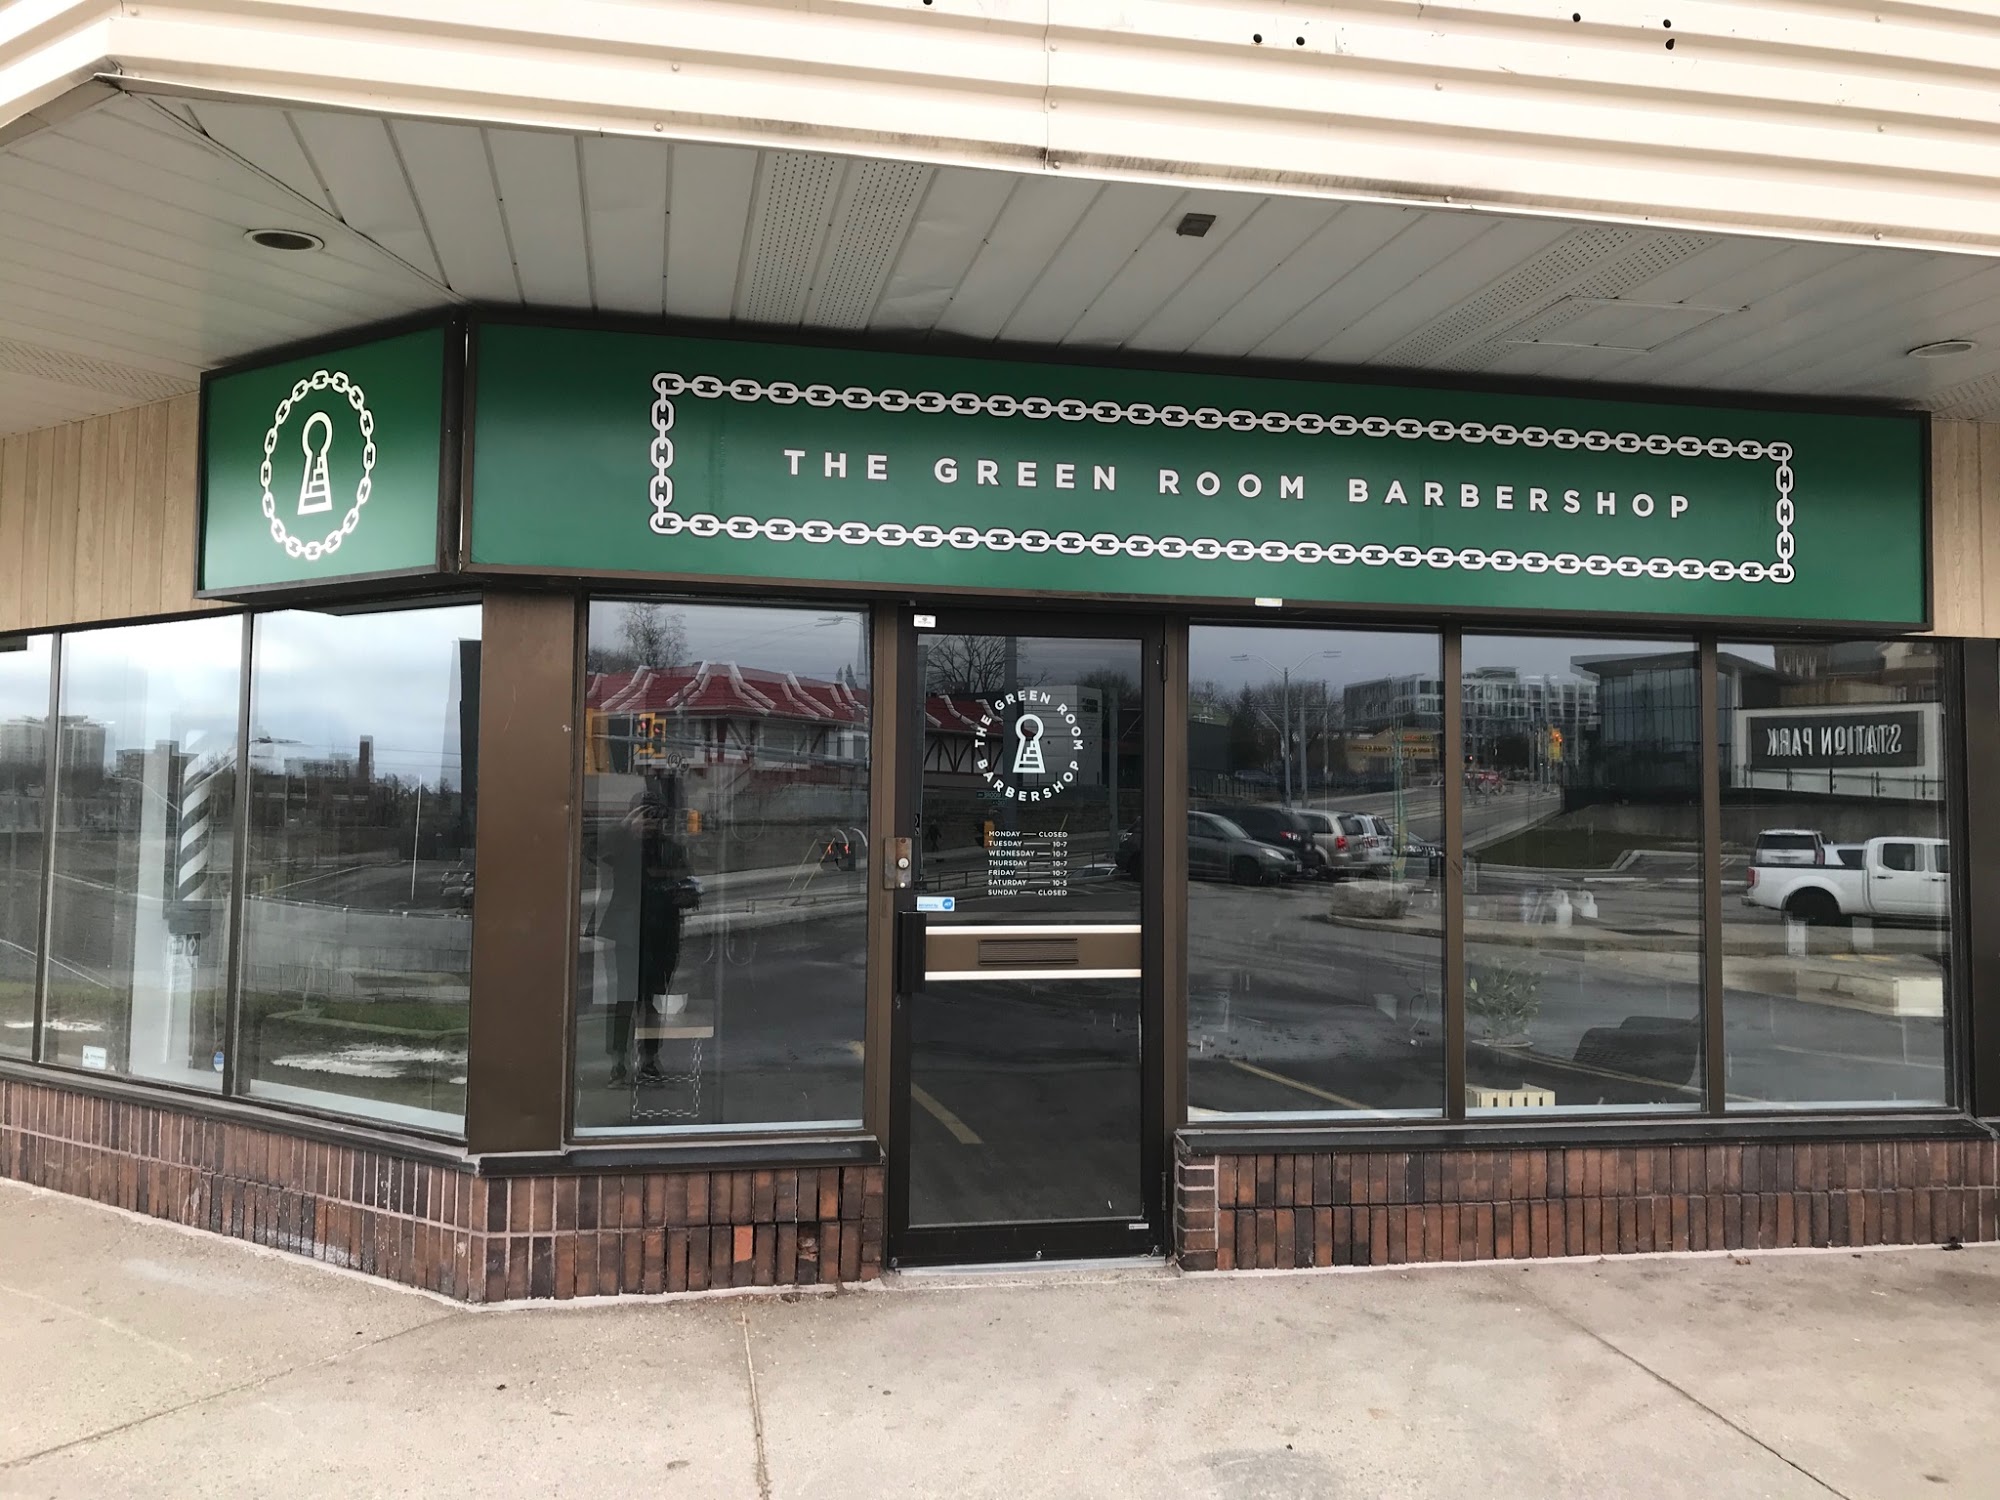 The Green Room Barbershop